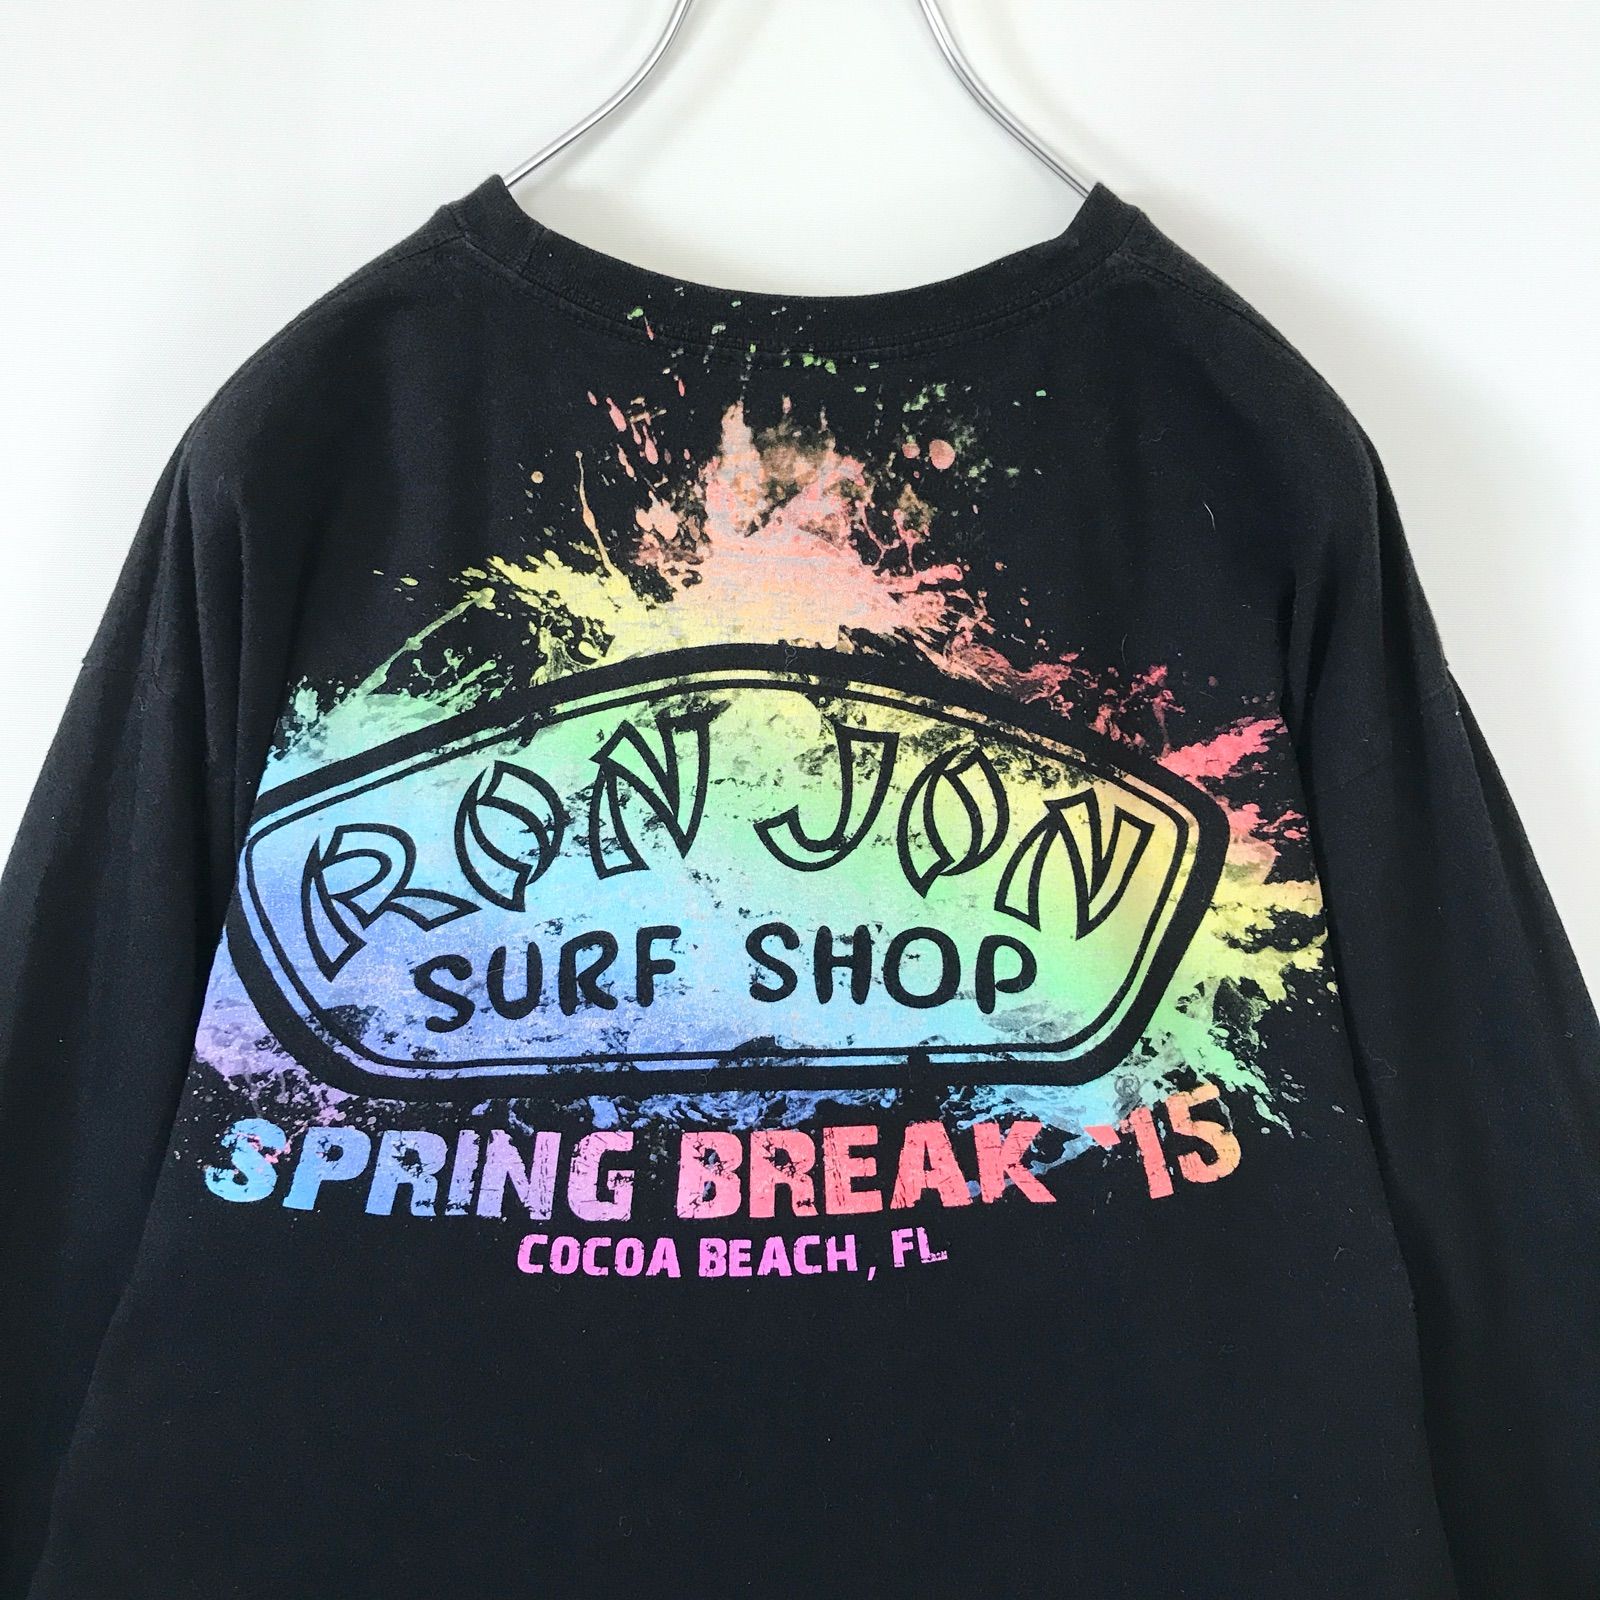 RON JON SURF SHOP☆ロンジョン☆フロリダ ココアビーチ☆SPRING